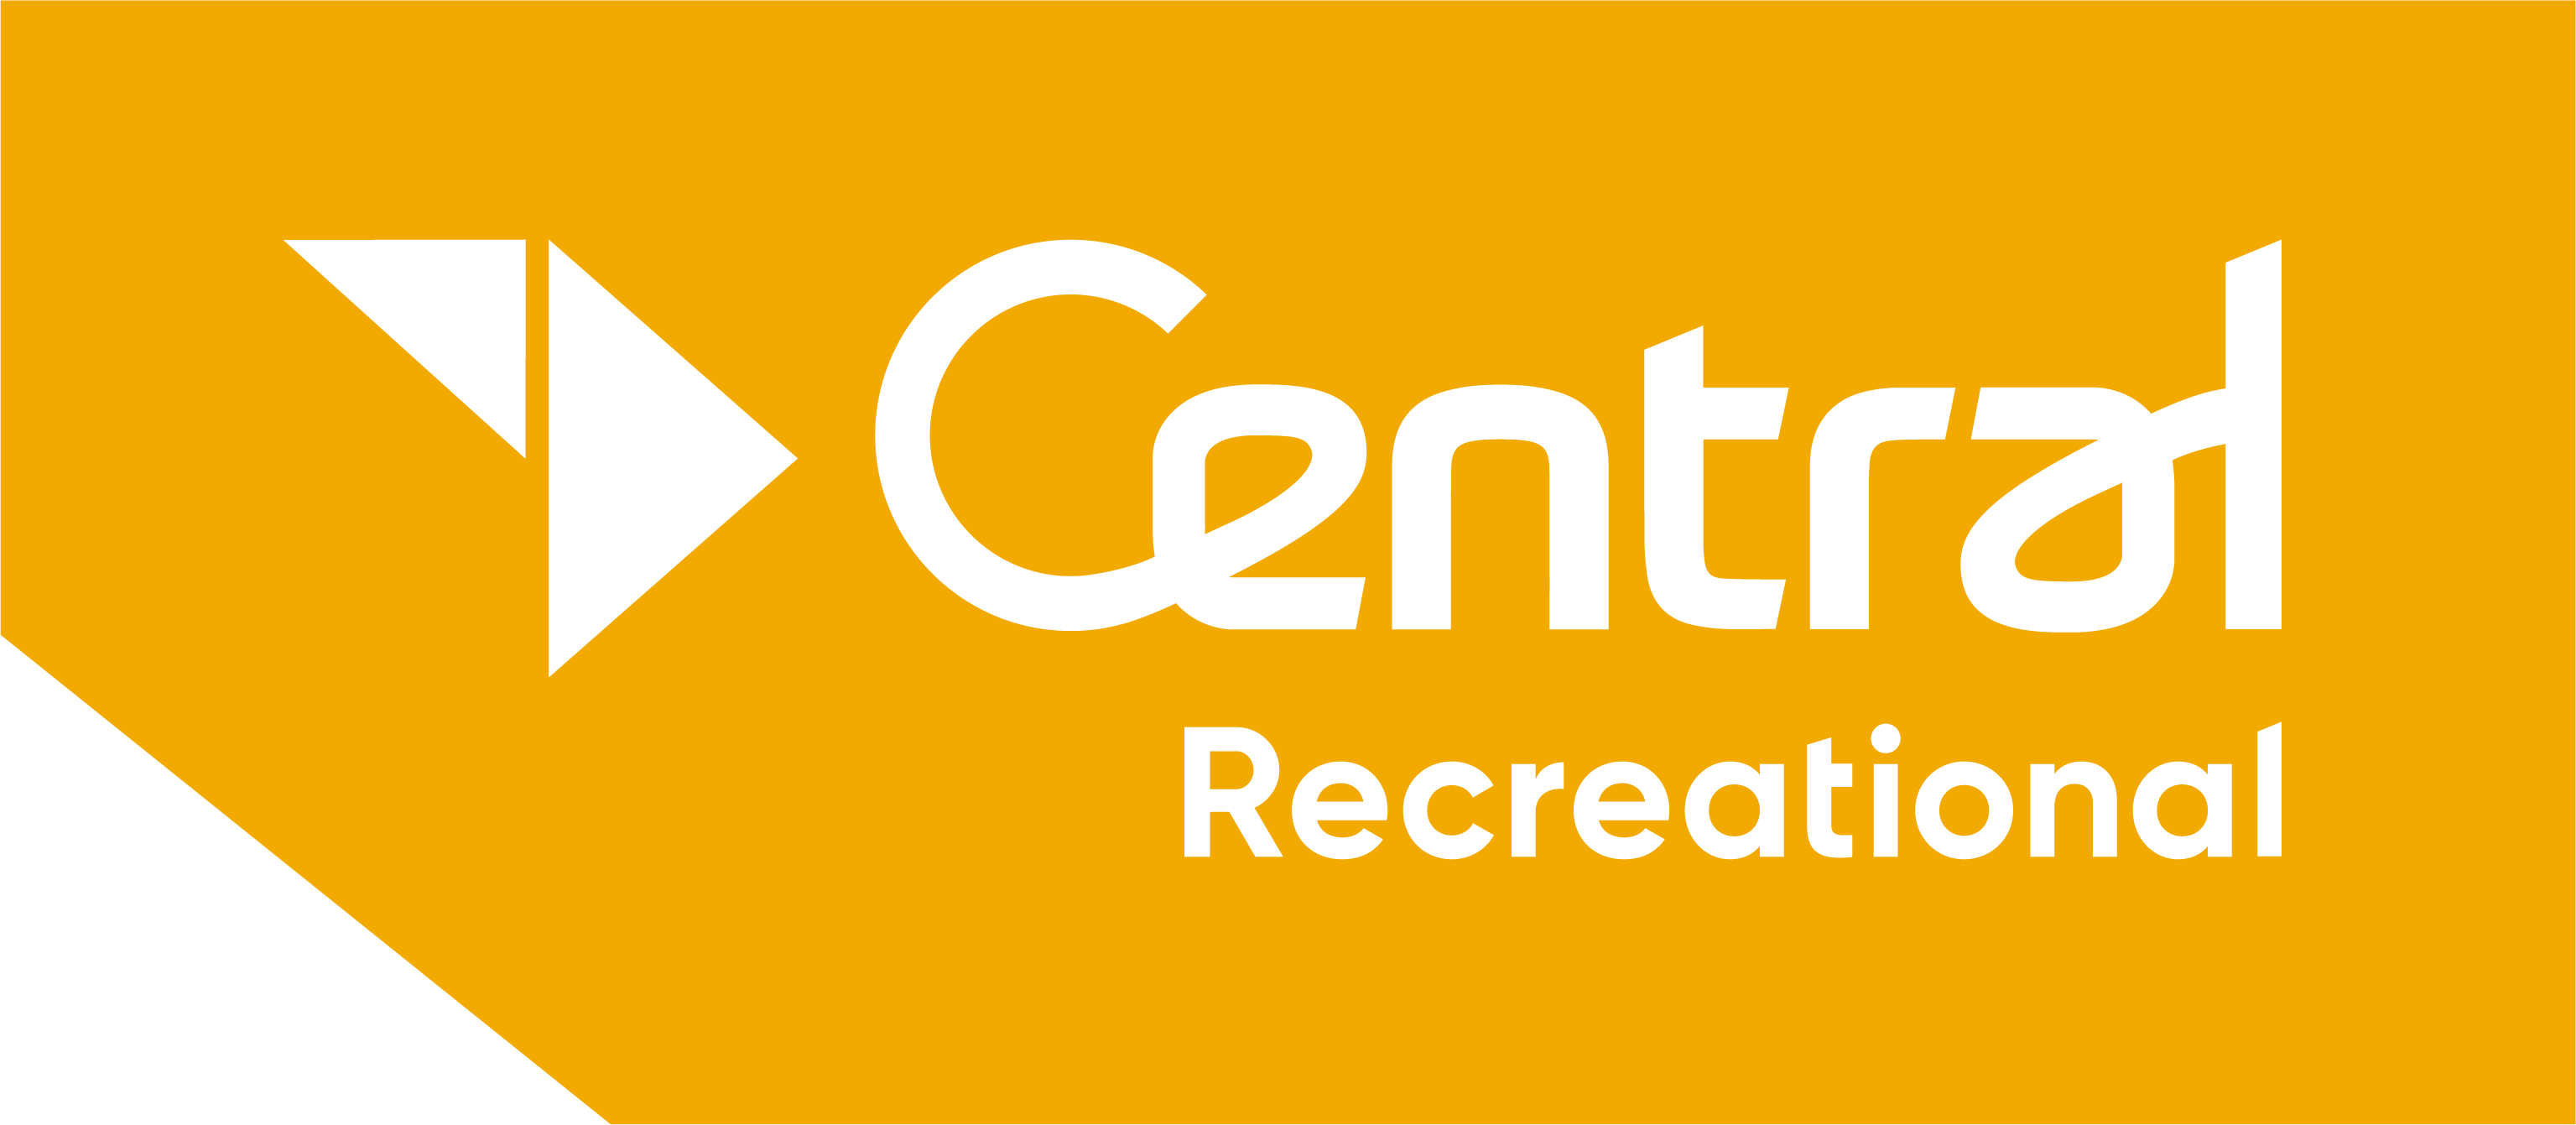 MASTER_Central_Recreational_Logo_RGB